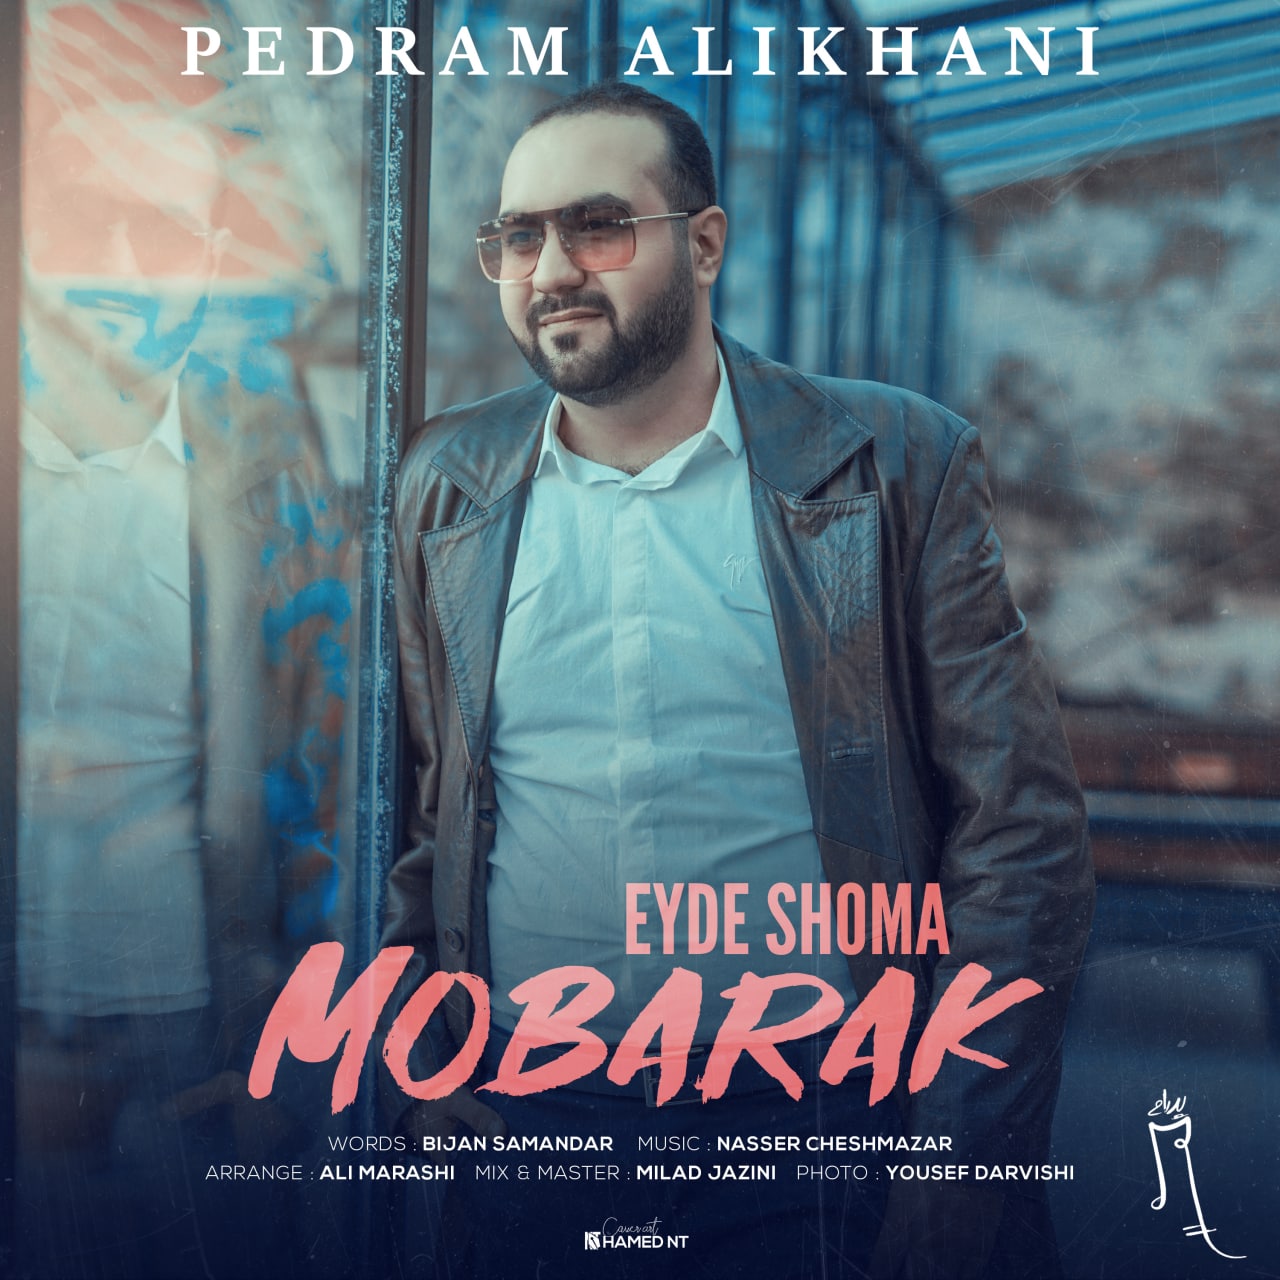 Pedram Alikhani – Eyde Shoma Mobarak